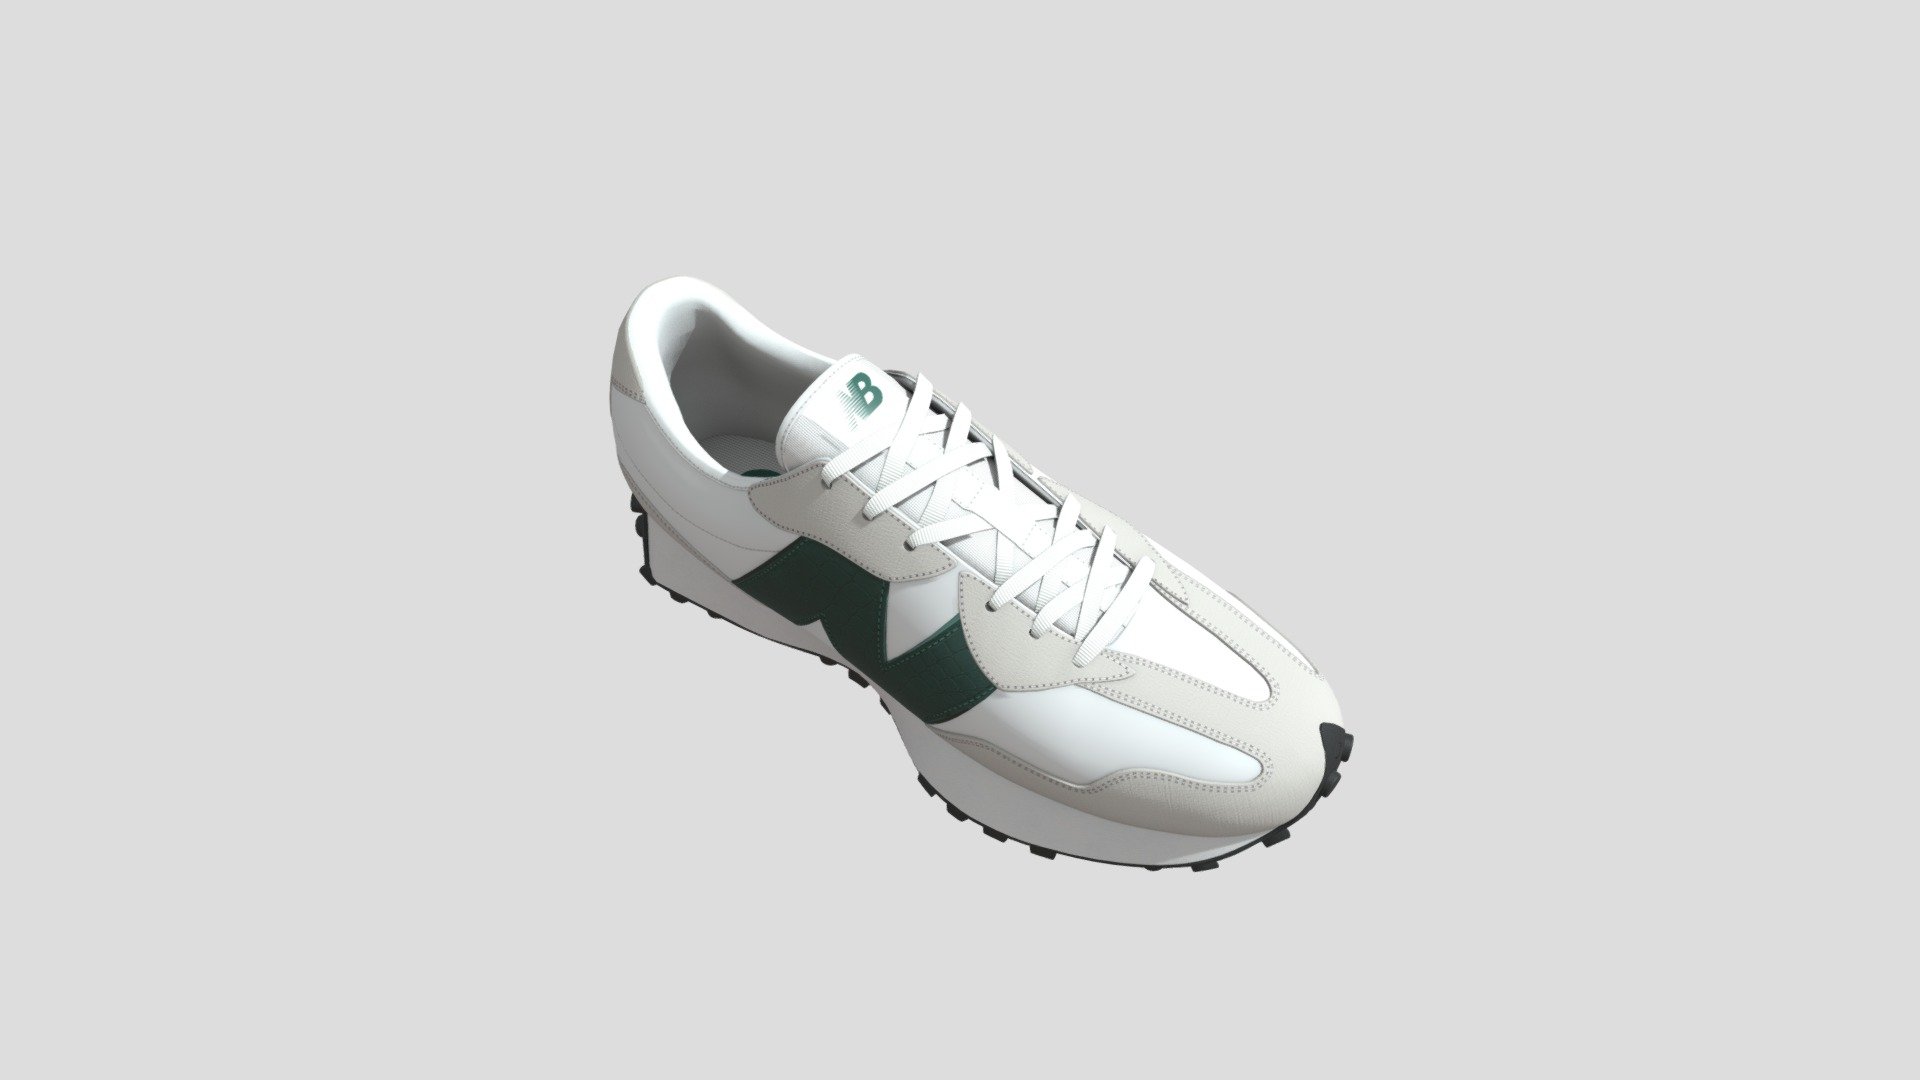 Shoe (New Balance) Realstic product - Shoe - 3D model by sauravkaushik14 3d model